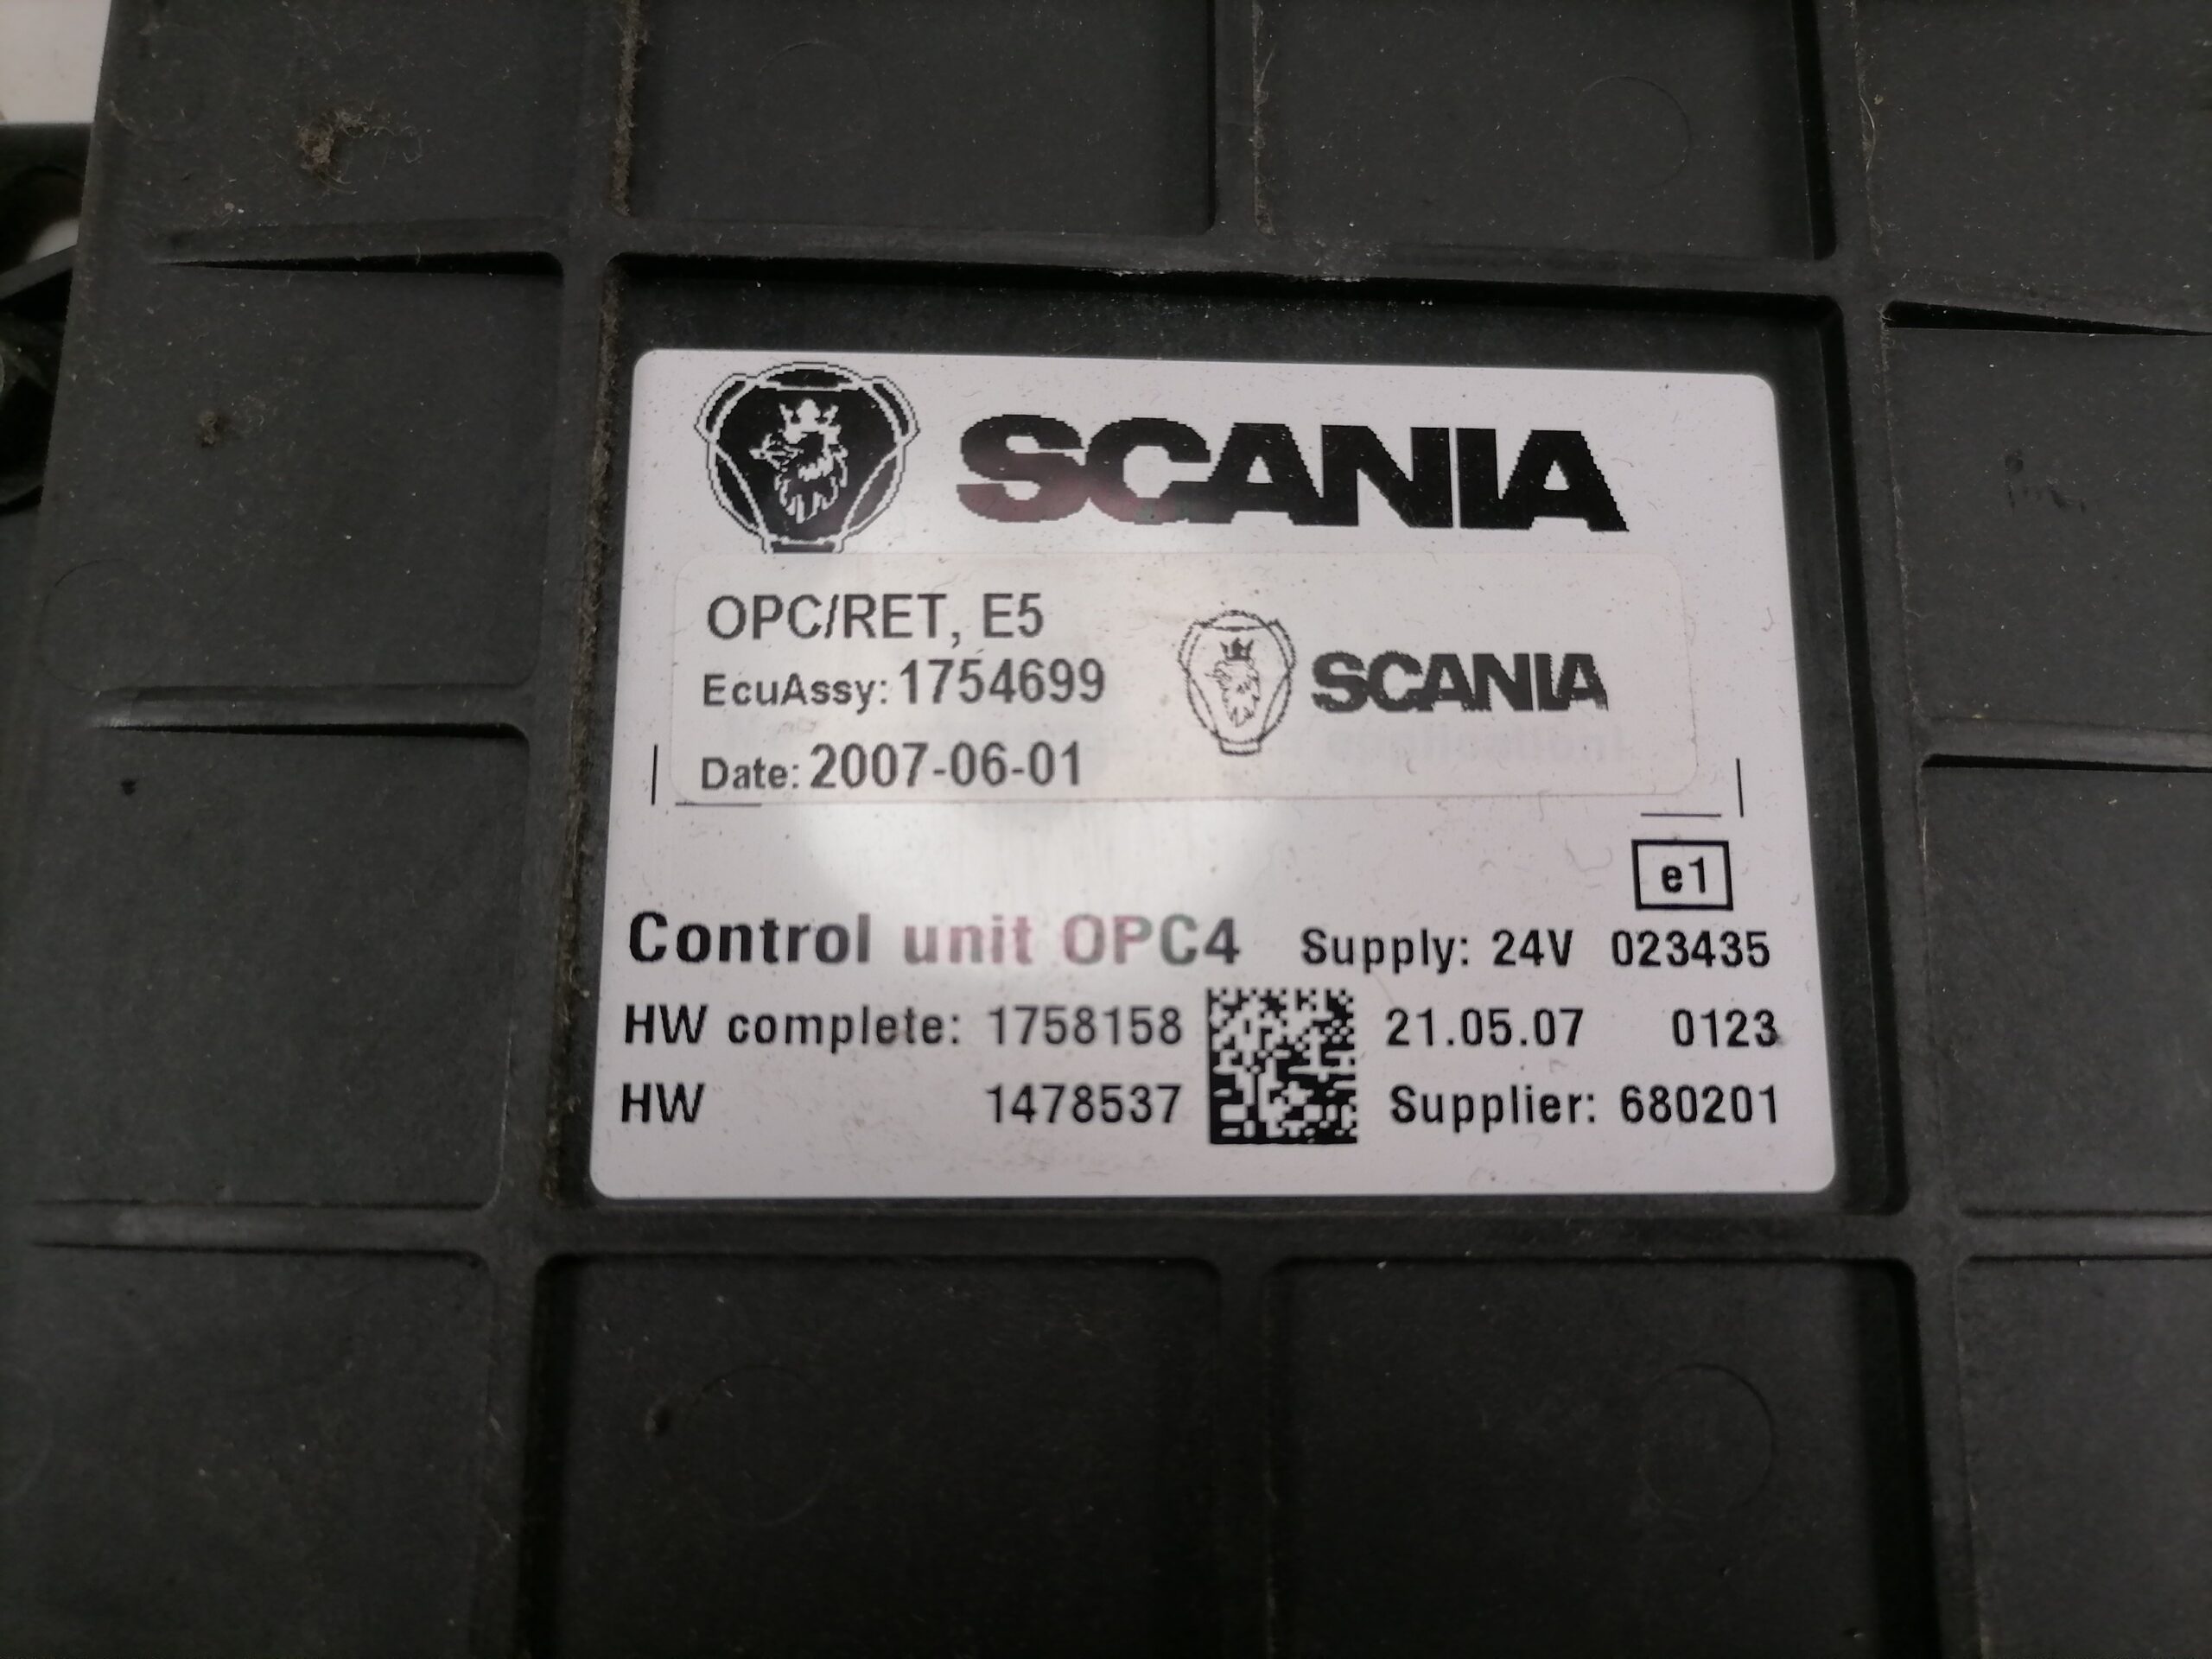 Scania juhtplokk, käigukast  OPC4